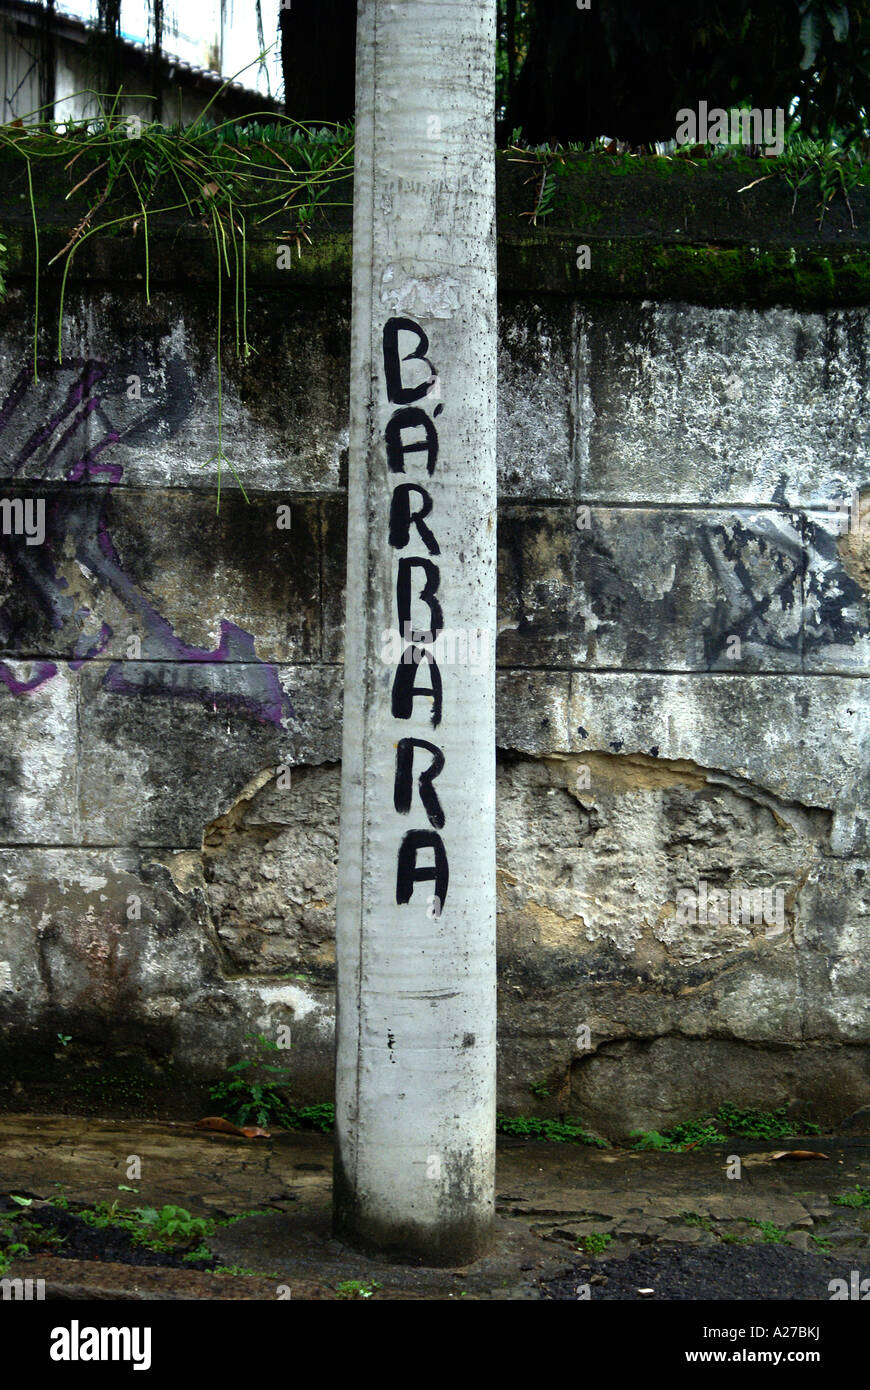 Graffiti: The name 'Barbara' on a concrete column Stock Photo